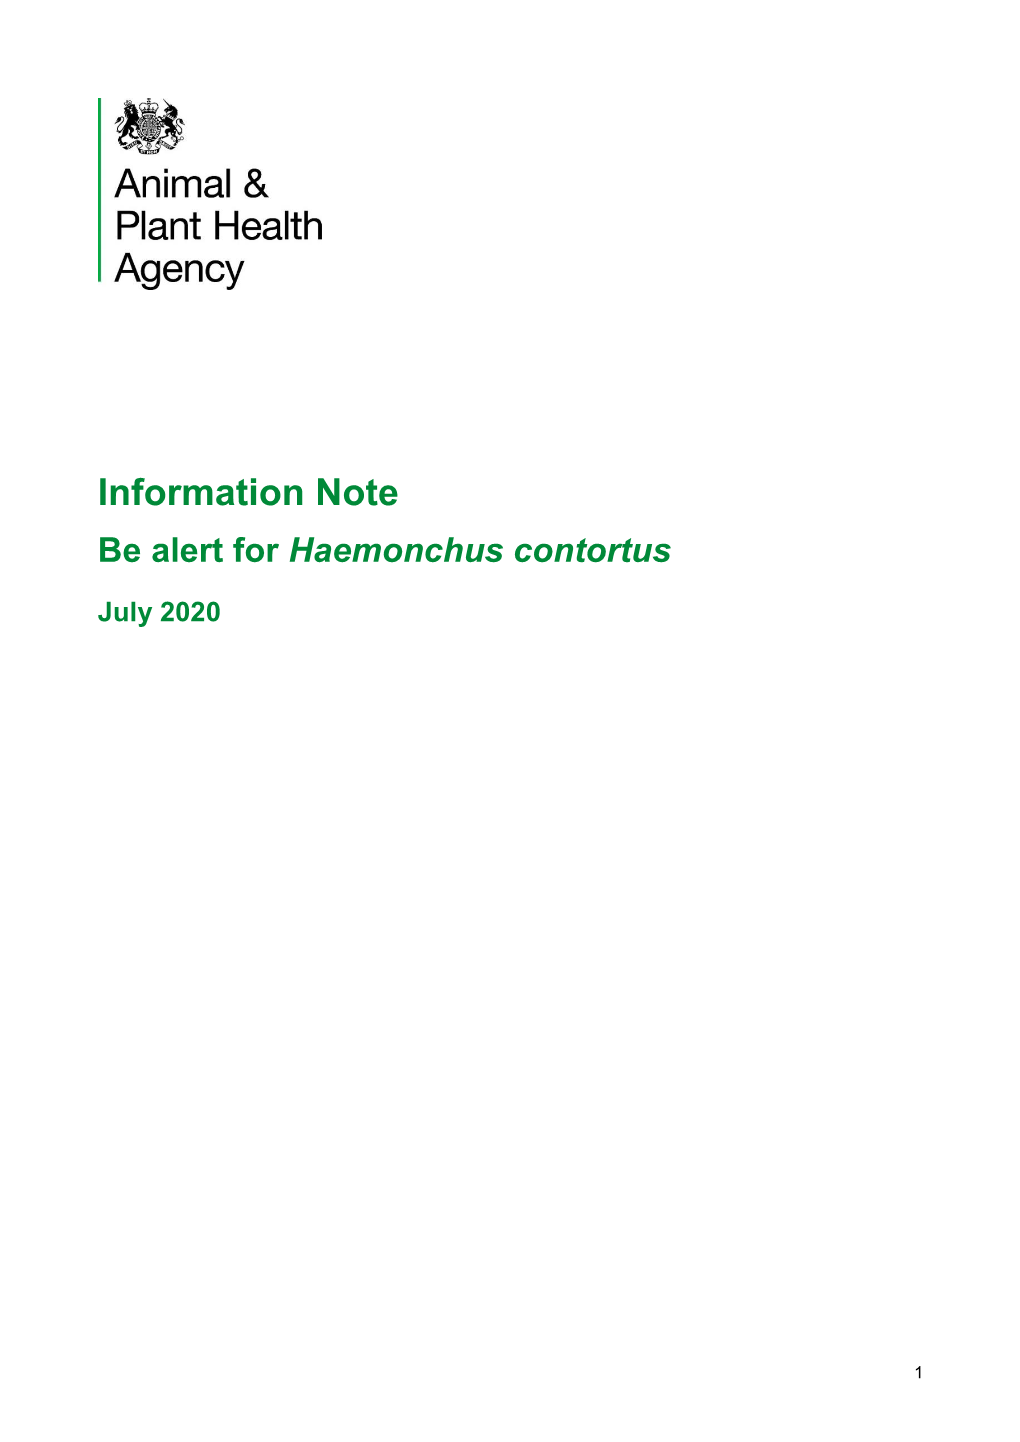 Be Alert to Haemonchus Contortus